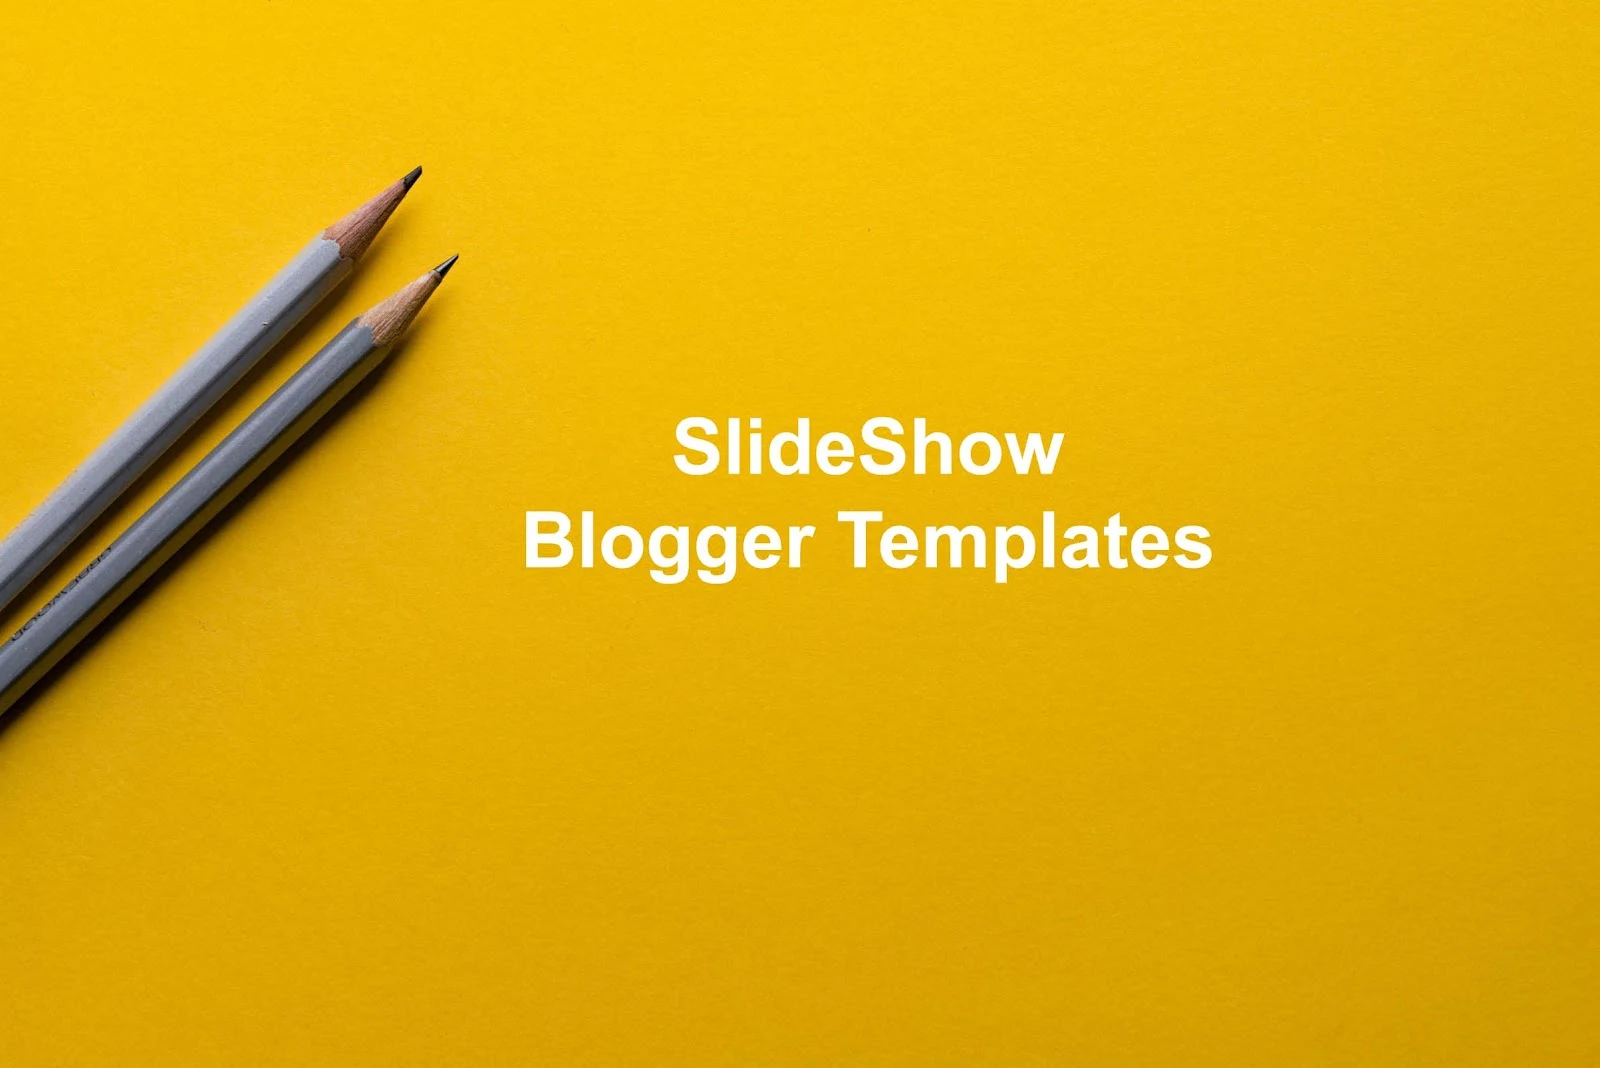 Slideshow Blogger Templates